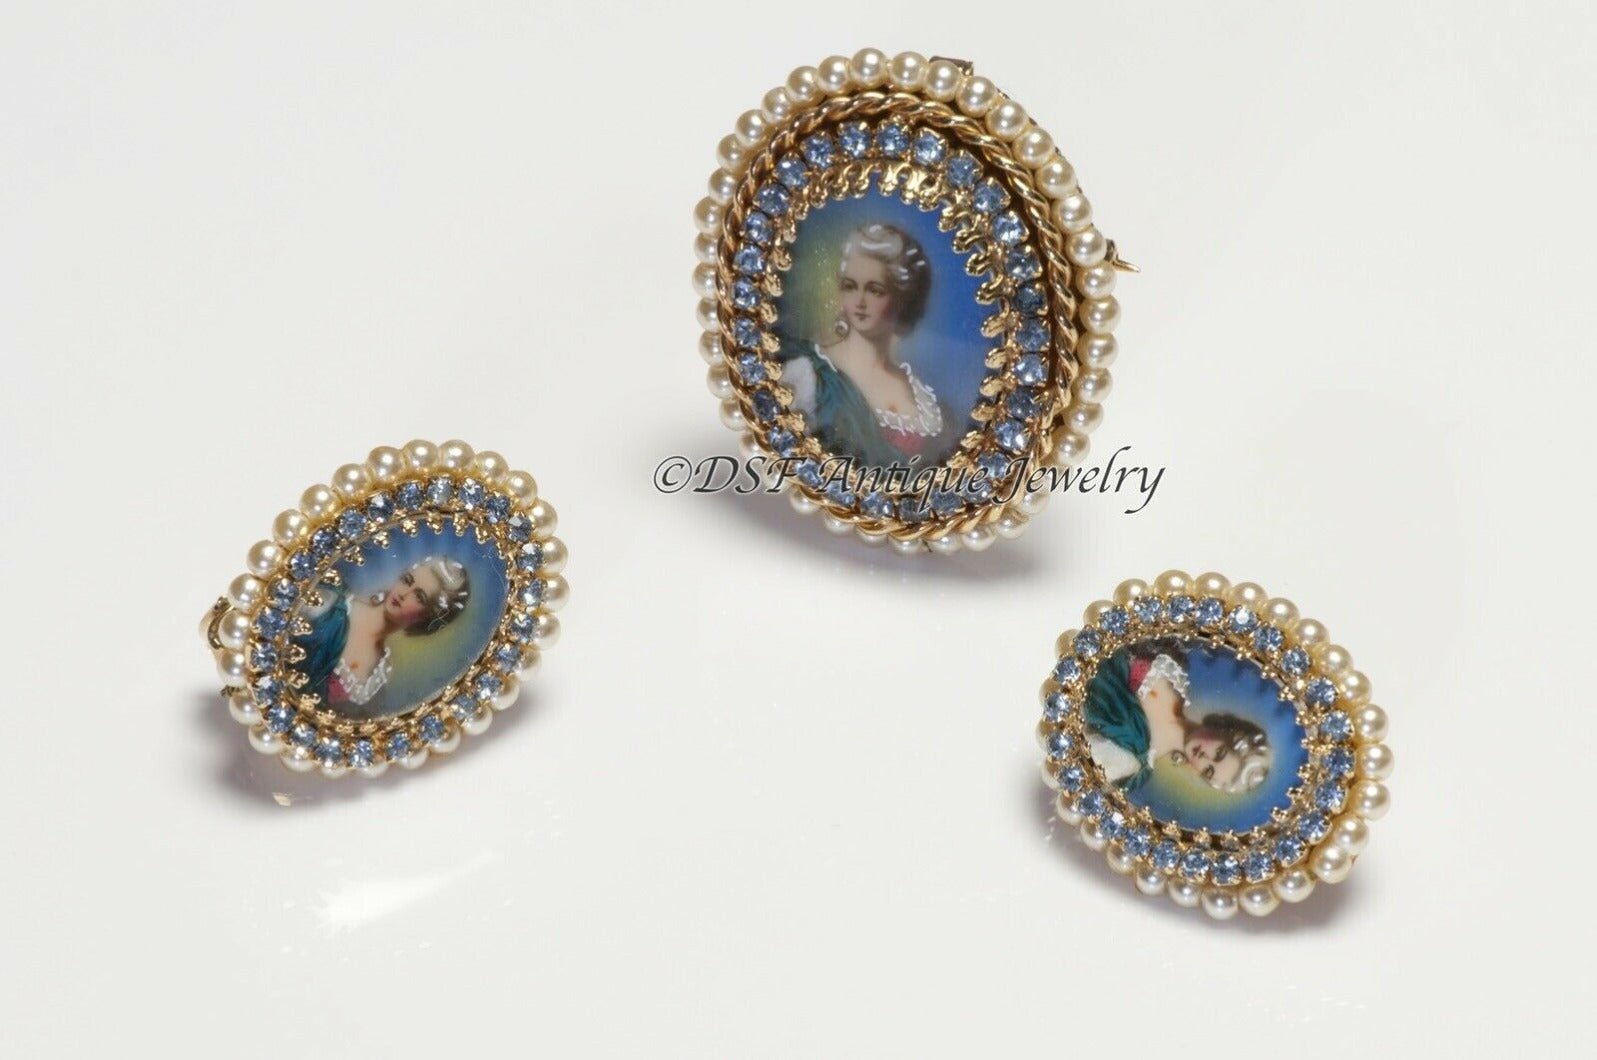 Vintage 1950’s HOBE Blue Crystal Lady Portrait Brooch Earrings Set